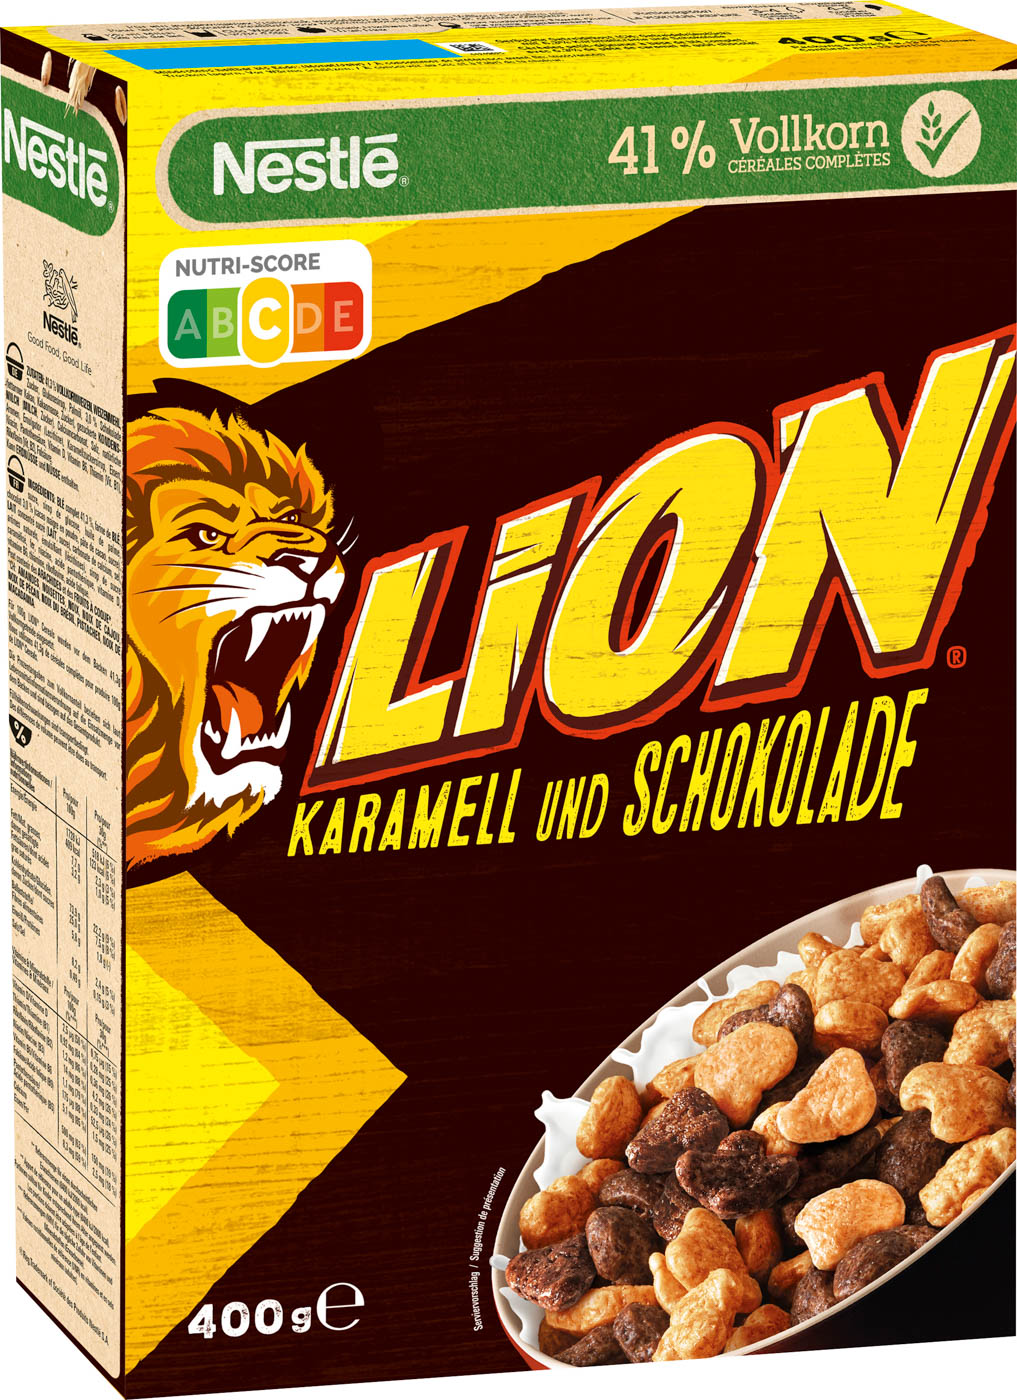 Nestle Lion Cereals 400G